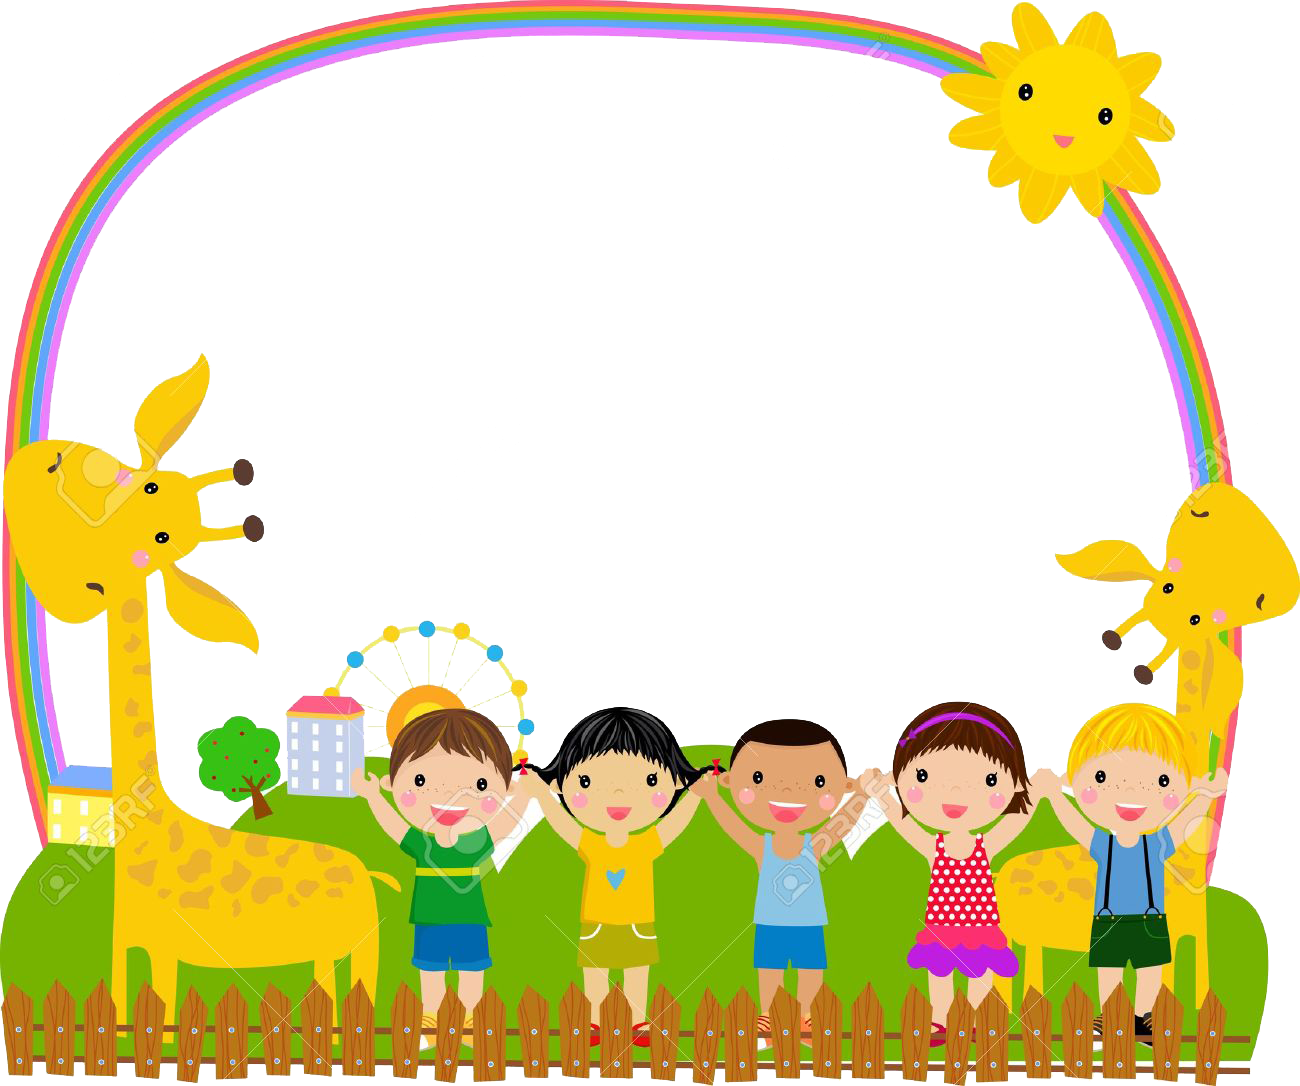 Download Picture Frame Illustration Cartoon Child Children HQ PNG Image